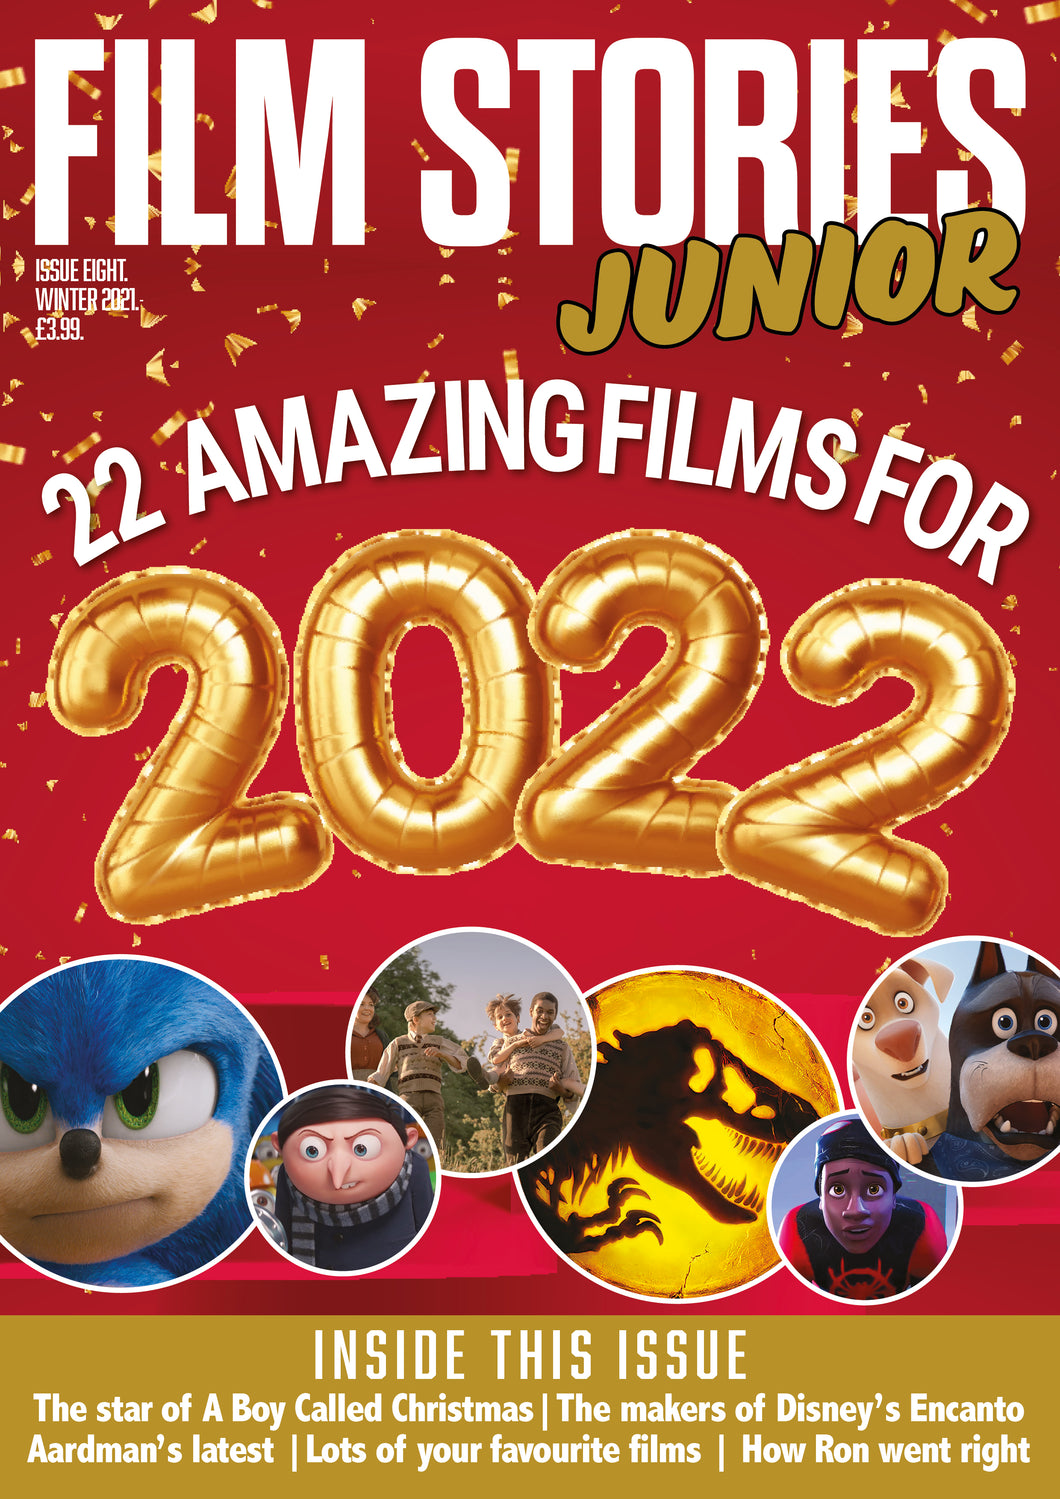 Film Stories Junior issue 8 (winter 2021/22)